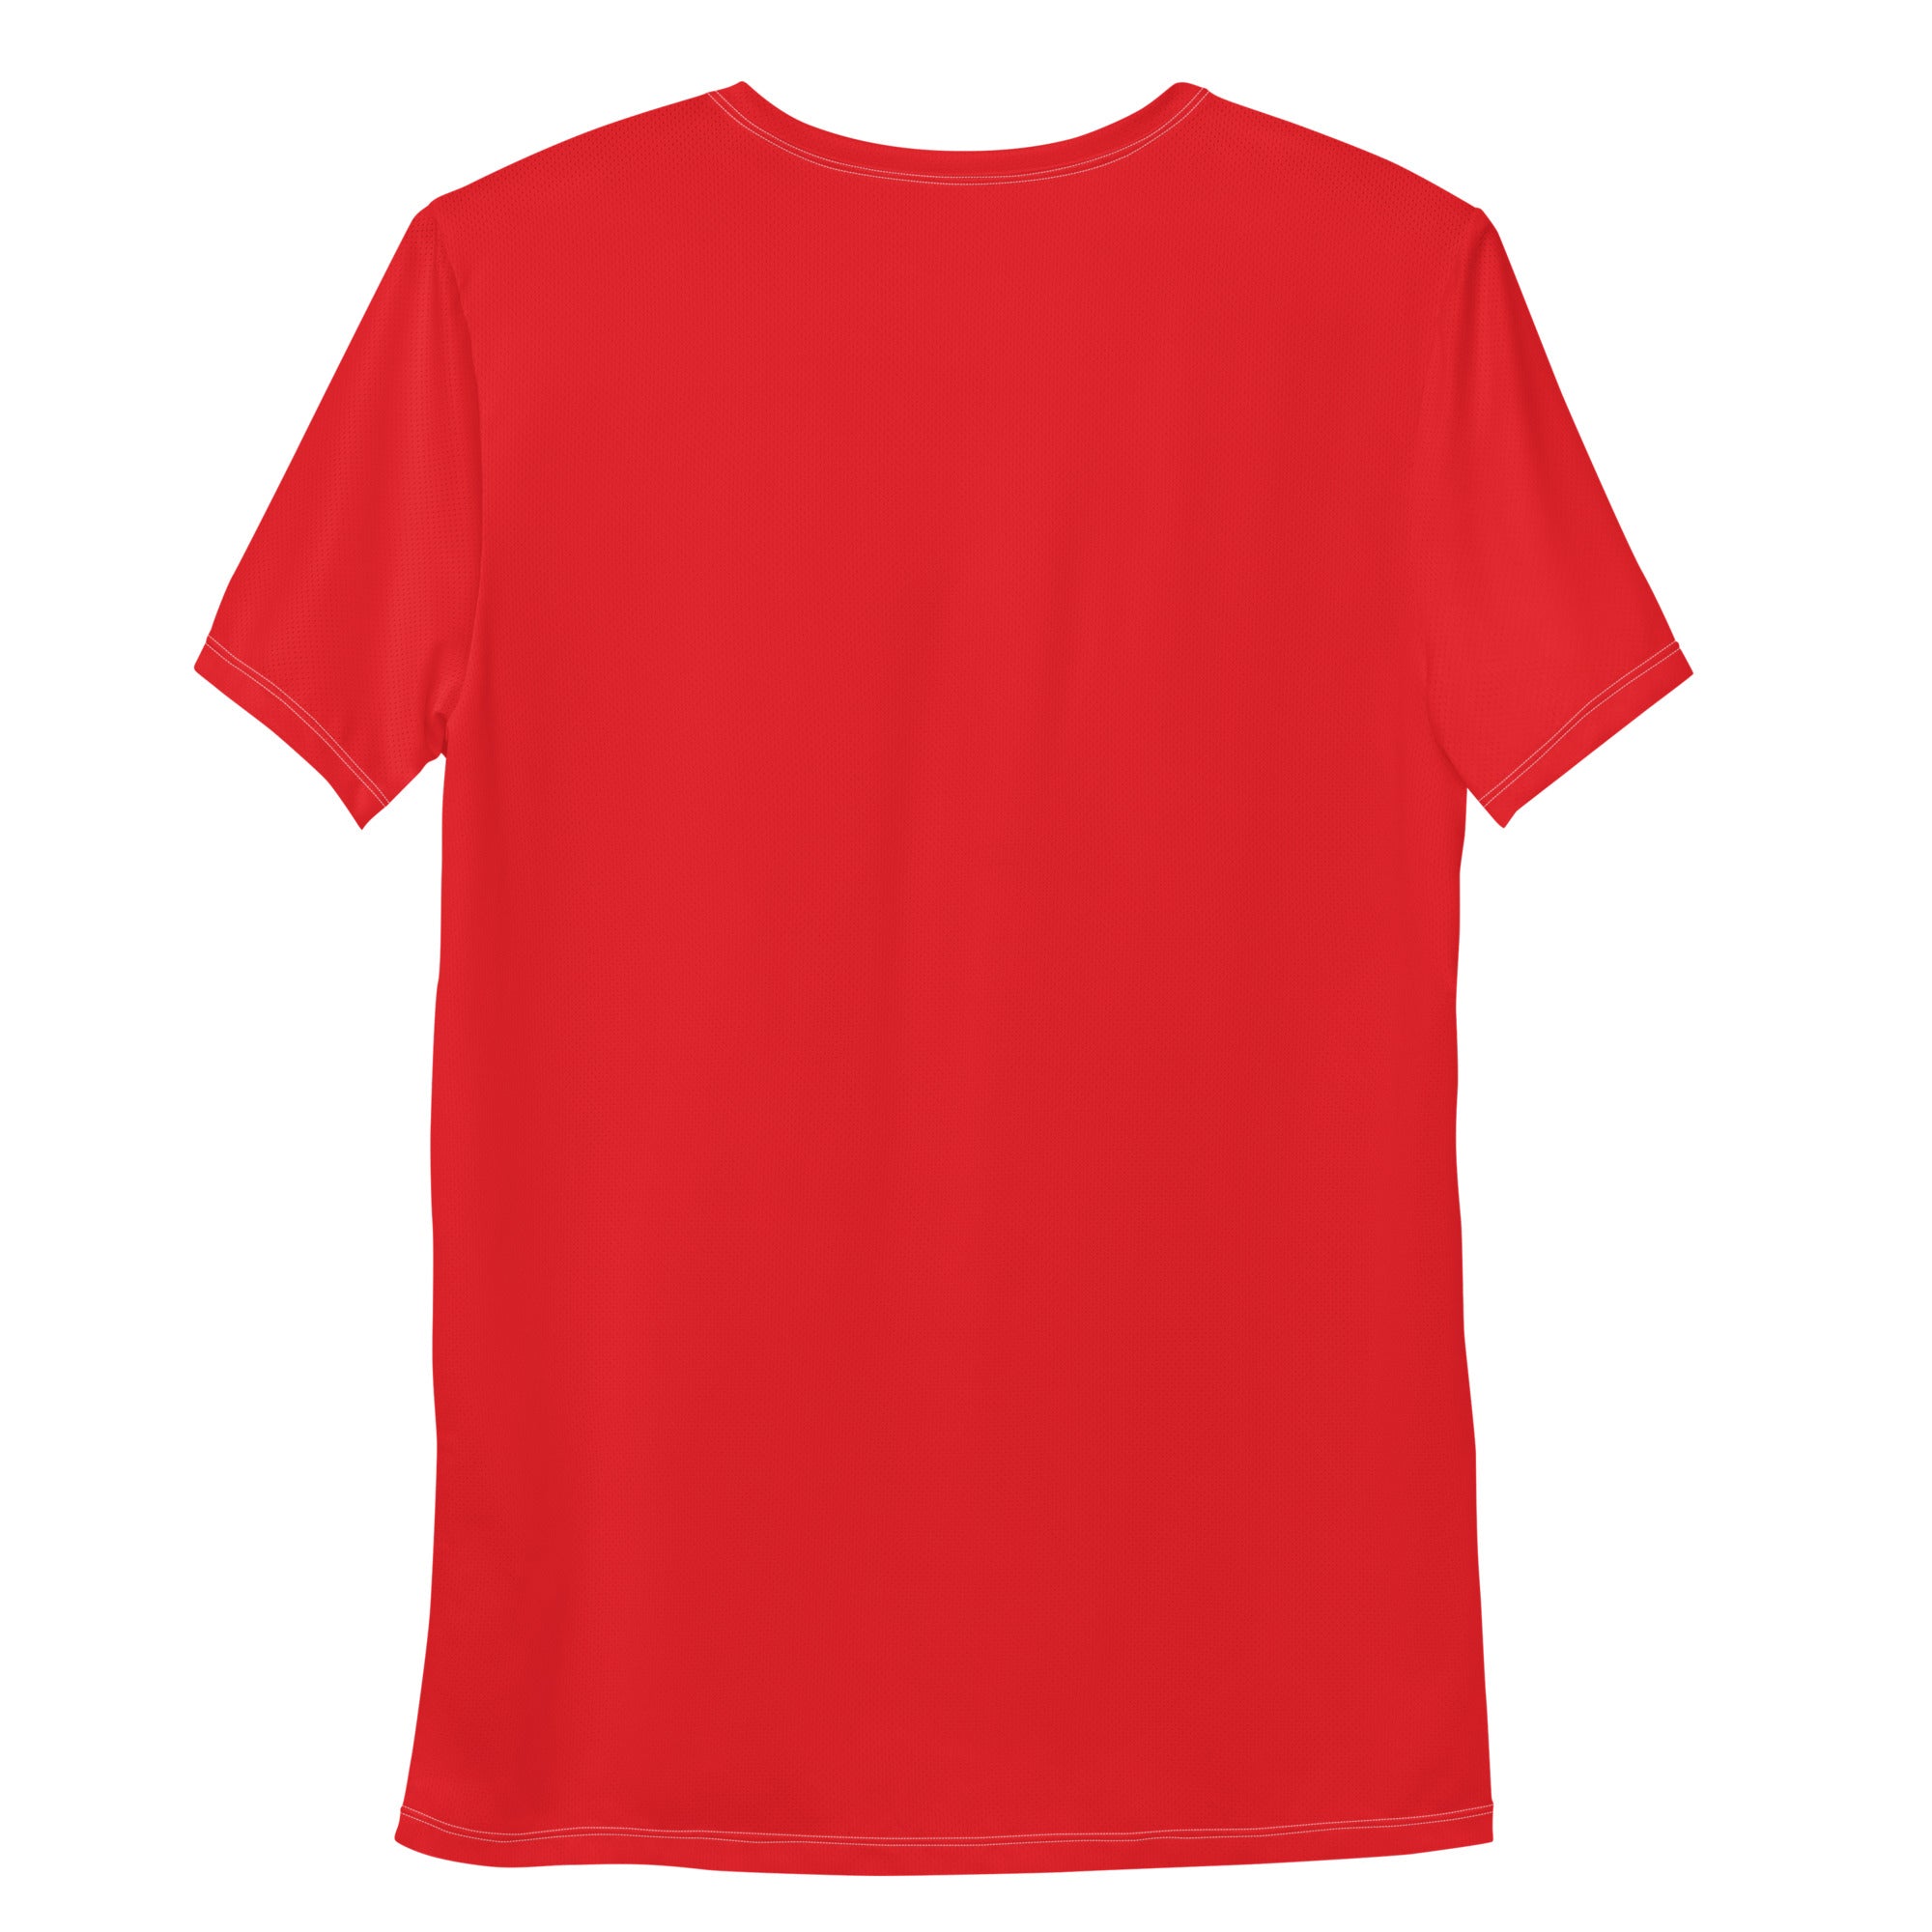 TH Performance Short Sleeve Men's Athletic T-shirt